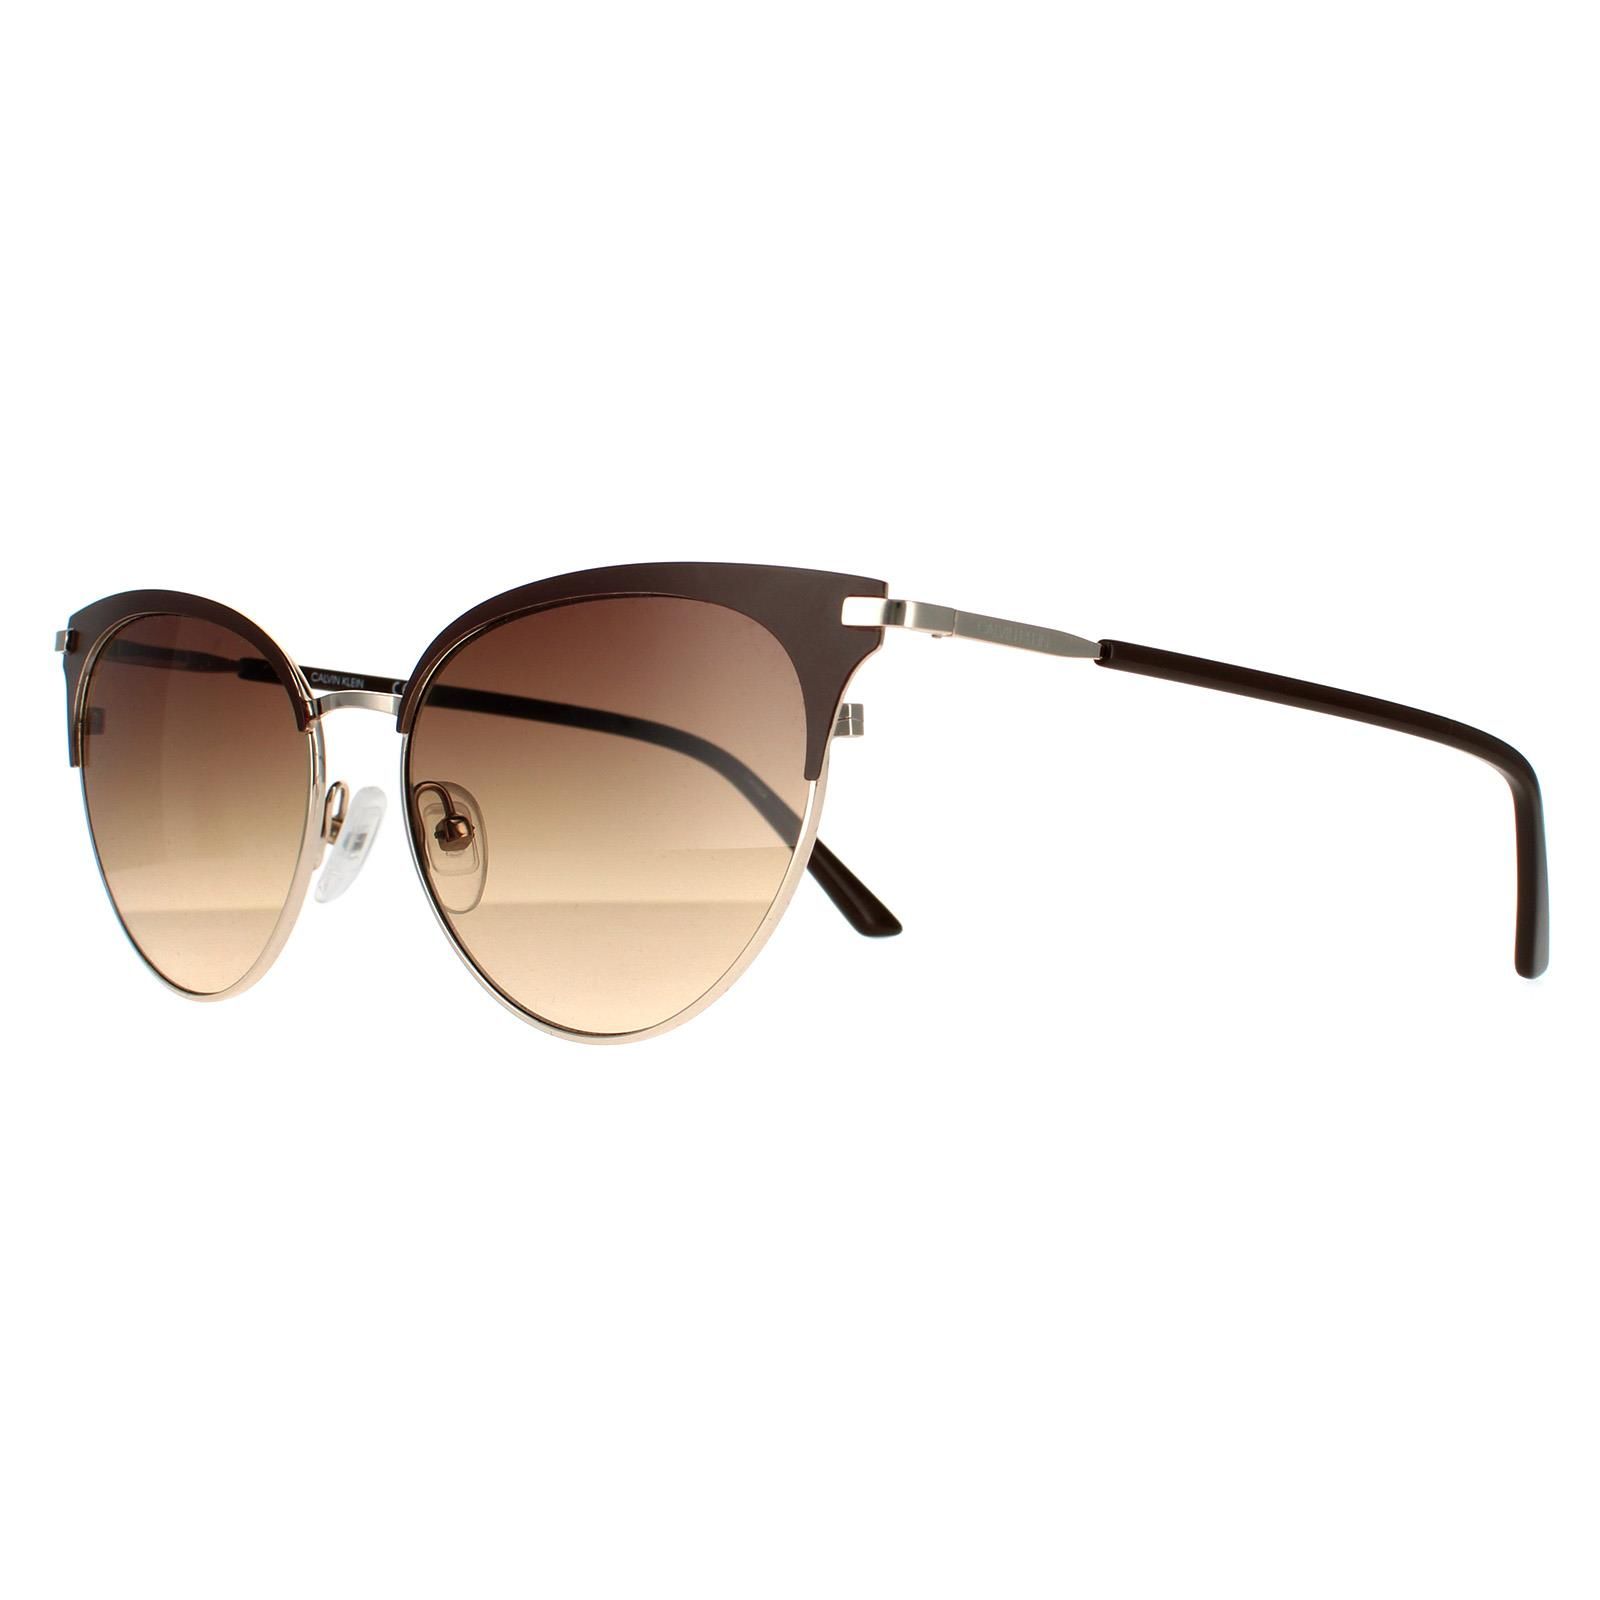 Calvin Klein Ck19309s Cat-eye Sunglasses in Dark Brown Womens Sunglasses Calvin Klein Sunglasses Brown - Save 36% 